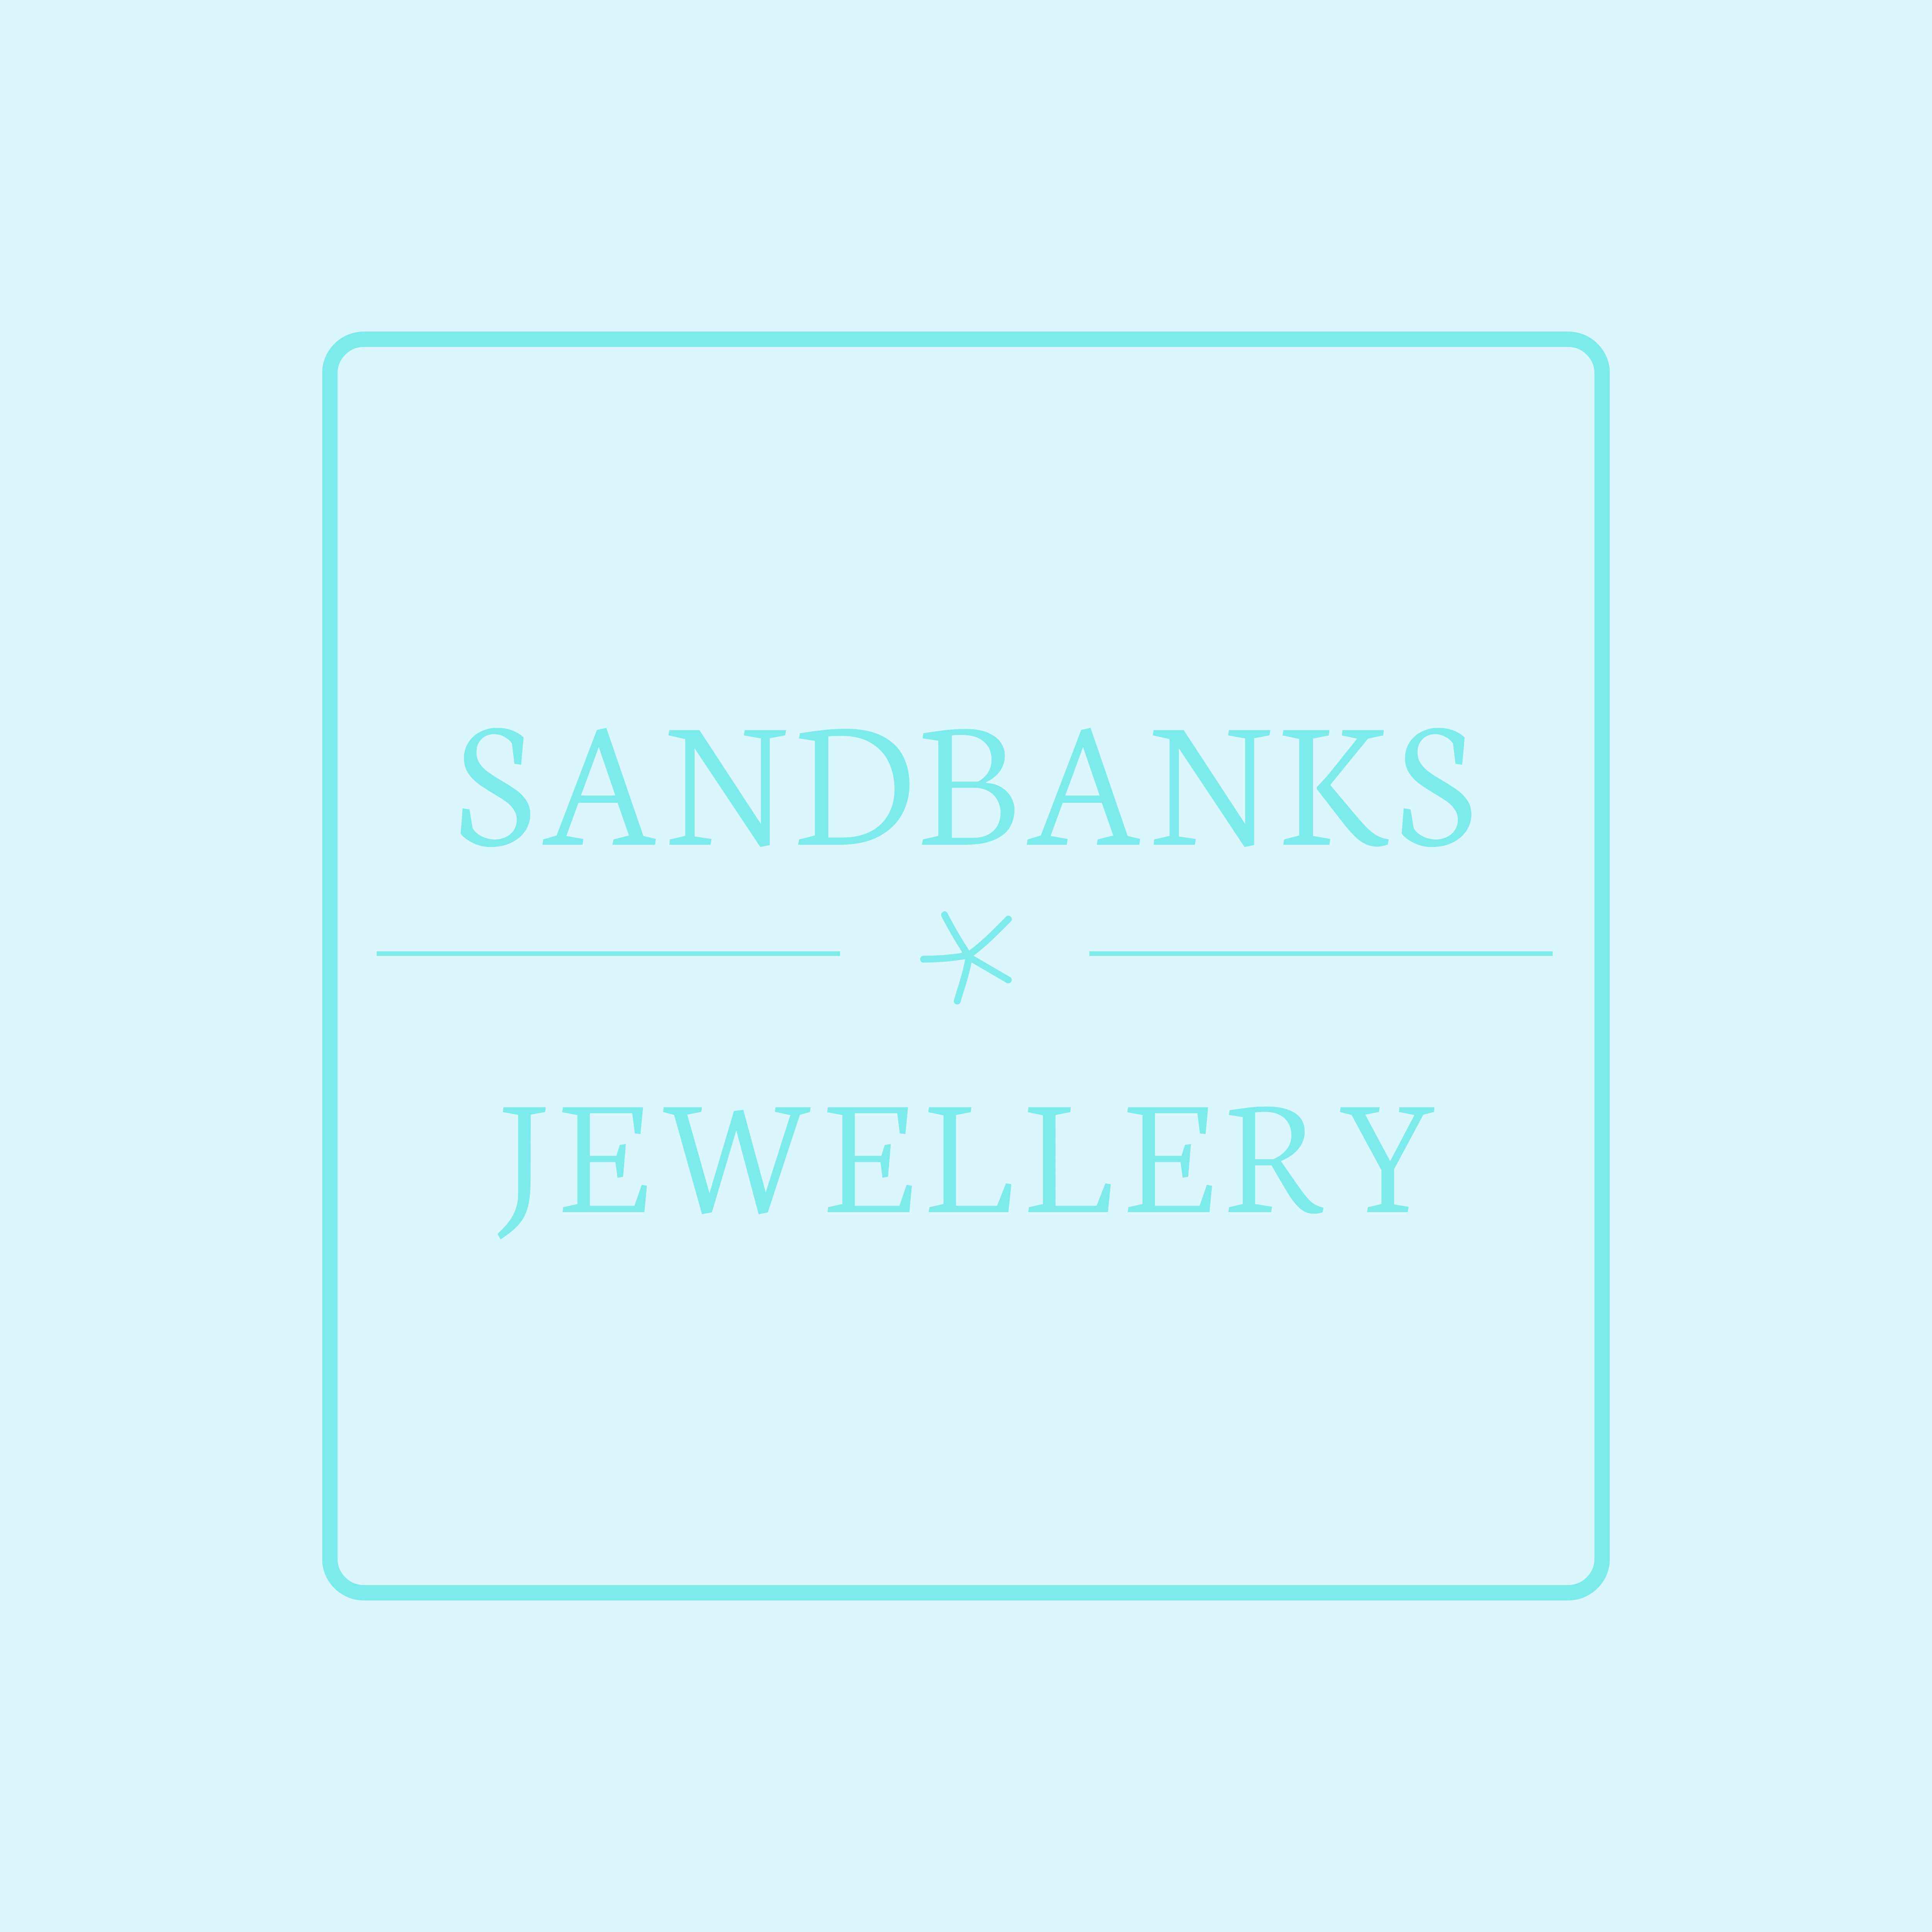 This shop is called SandbanksJewellery 